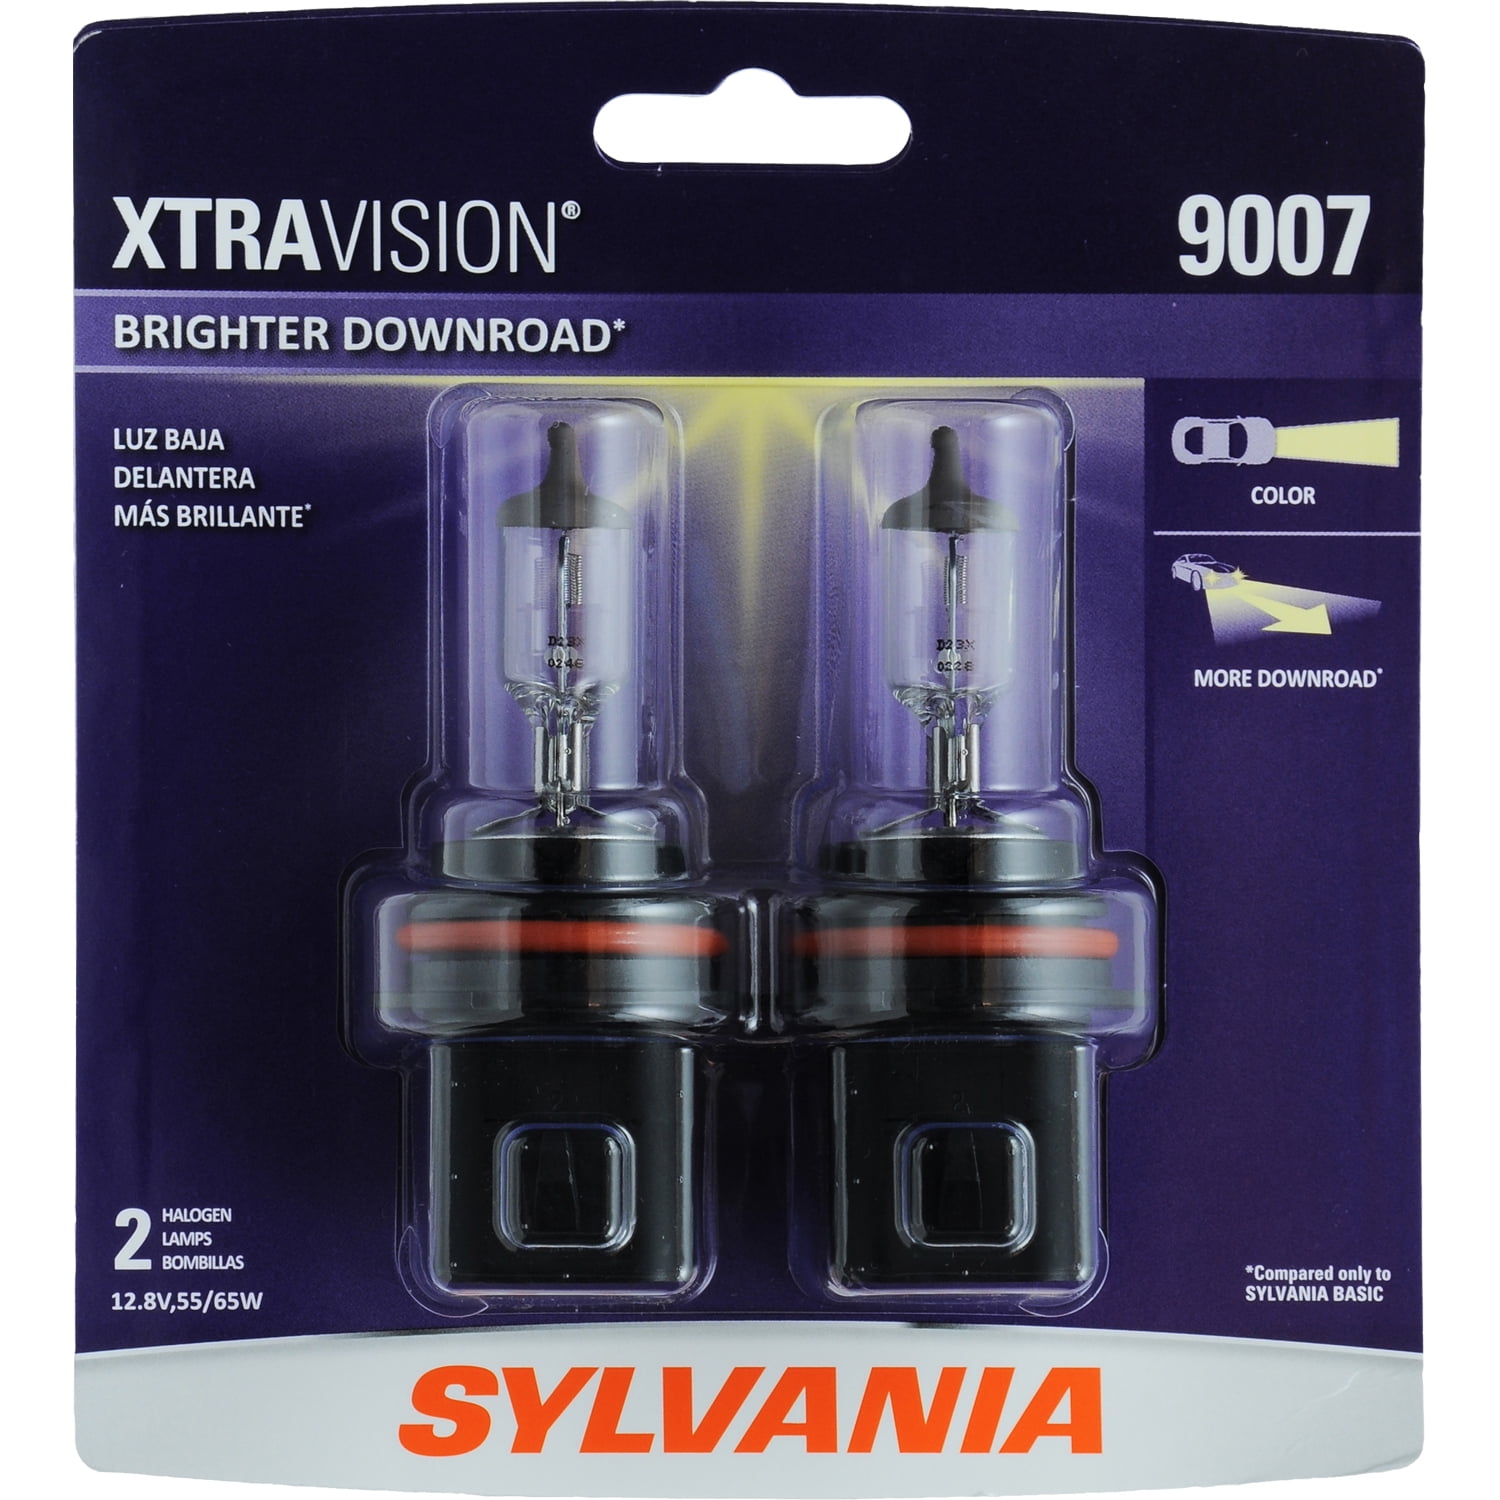 Sylvania 9007 XtraVision Halogen Headlight Bulb, Pack of 2. - Walmart